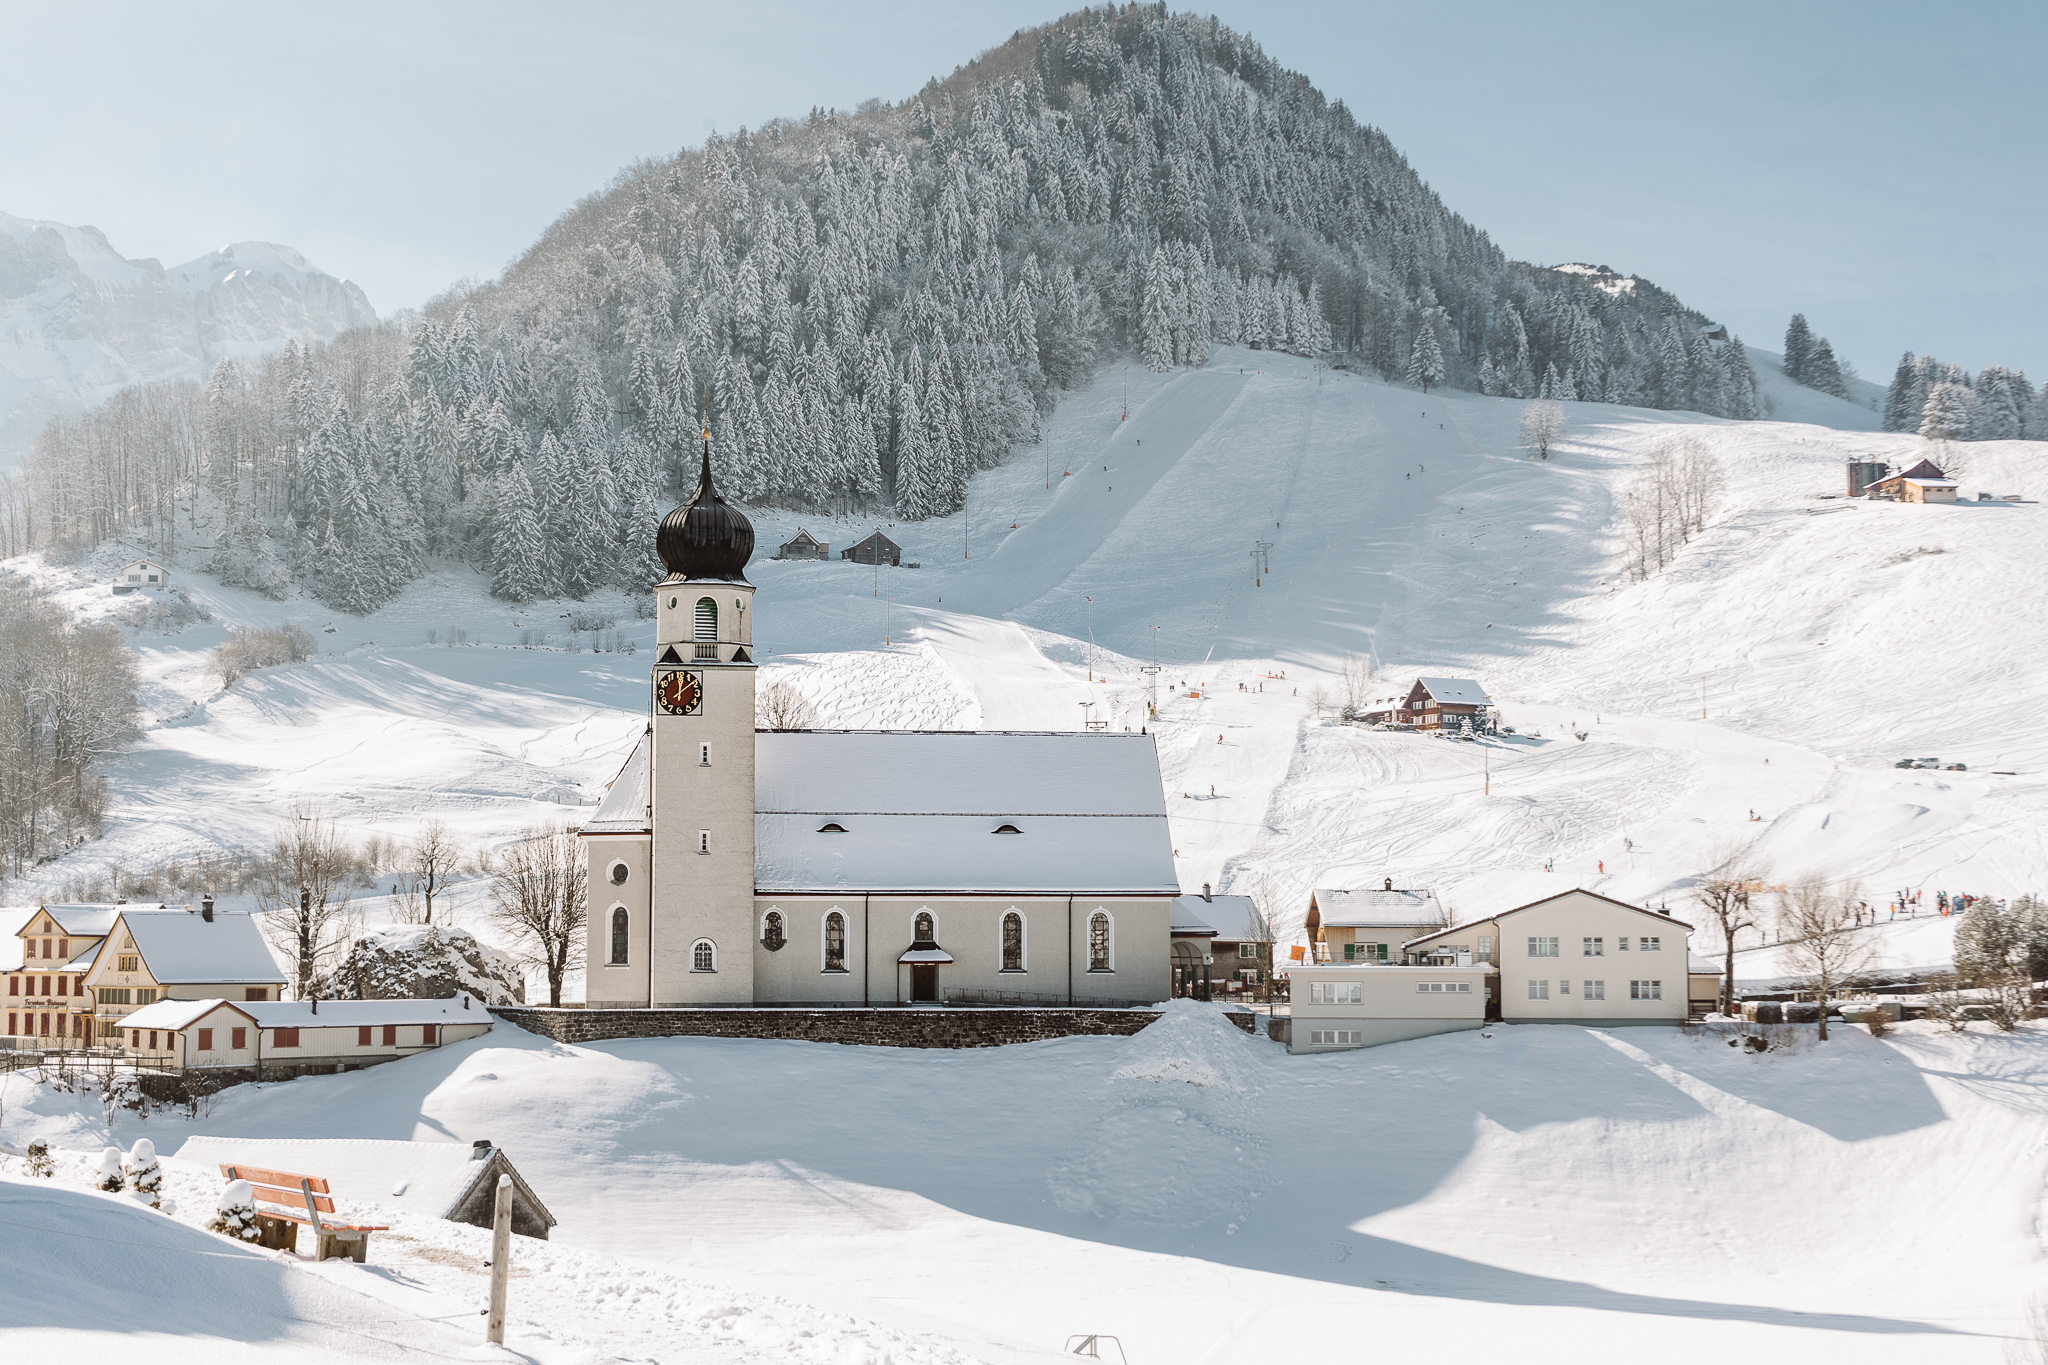 Appenzell in winter